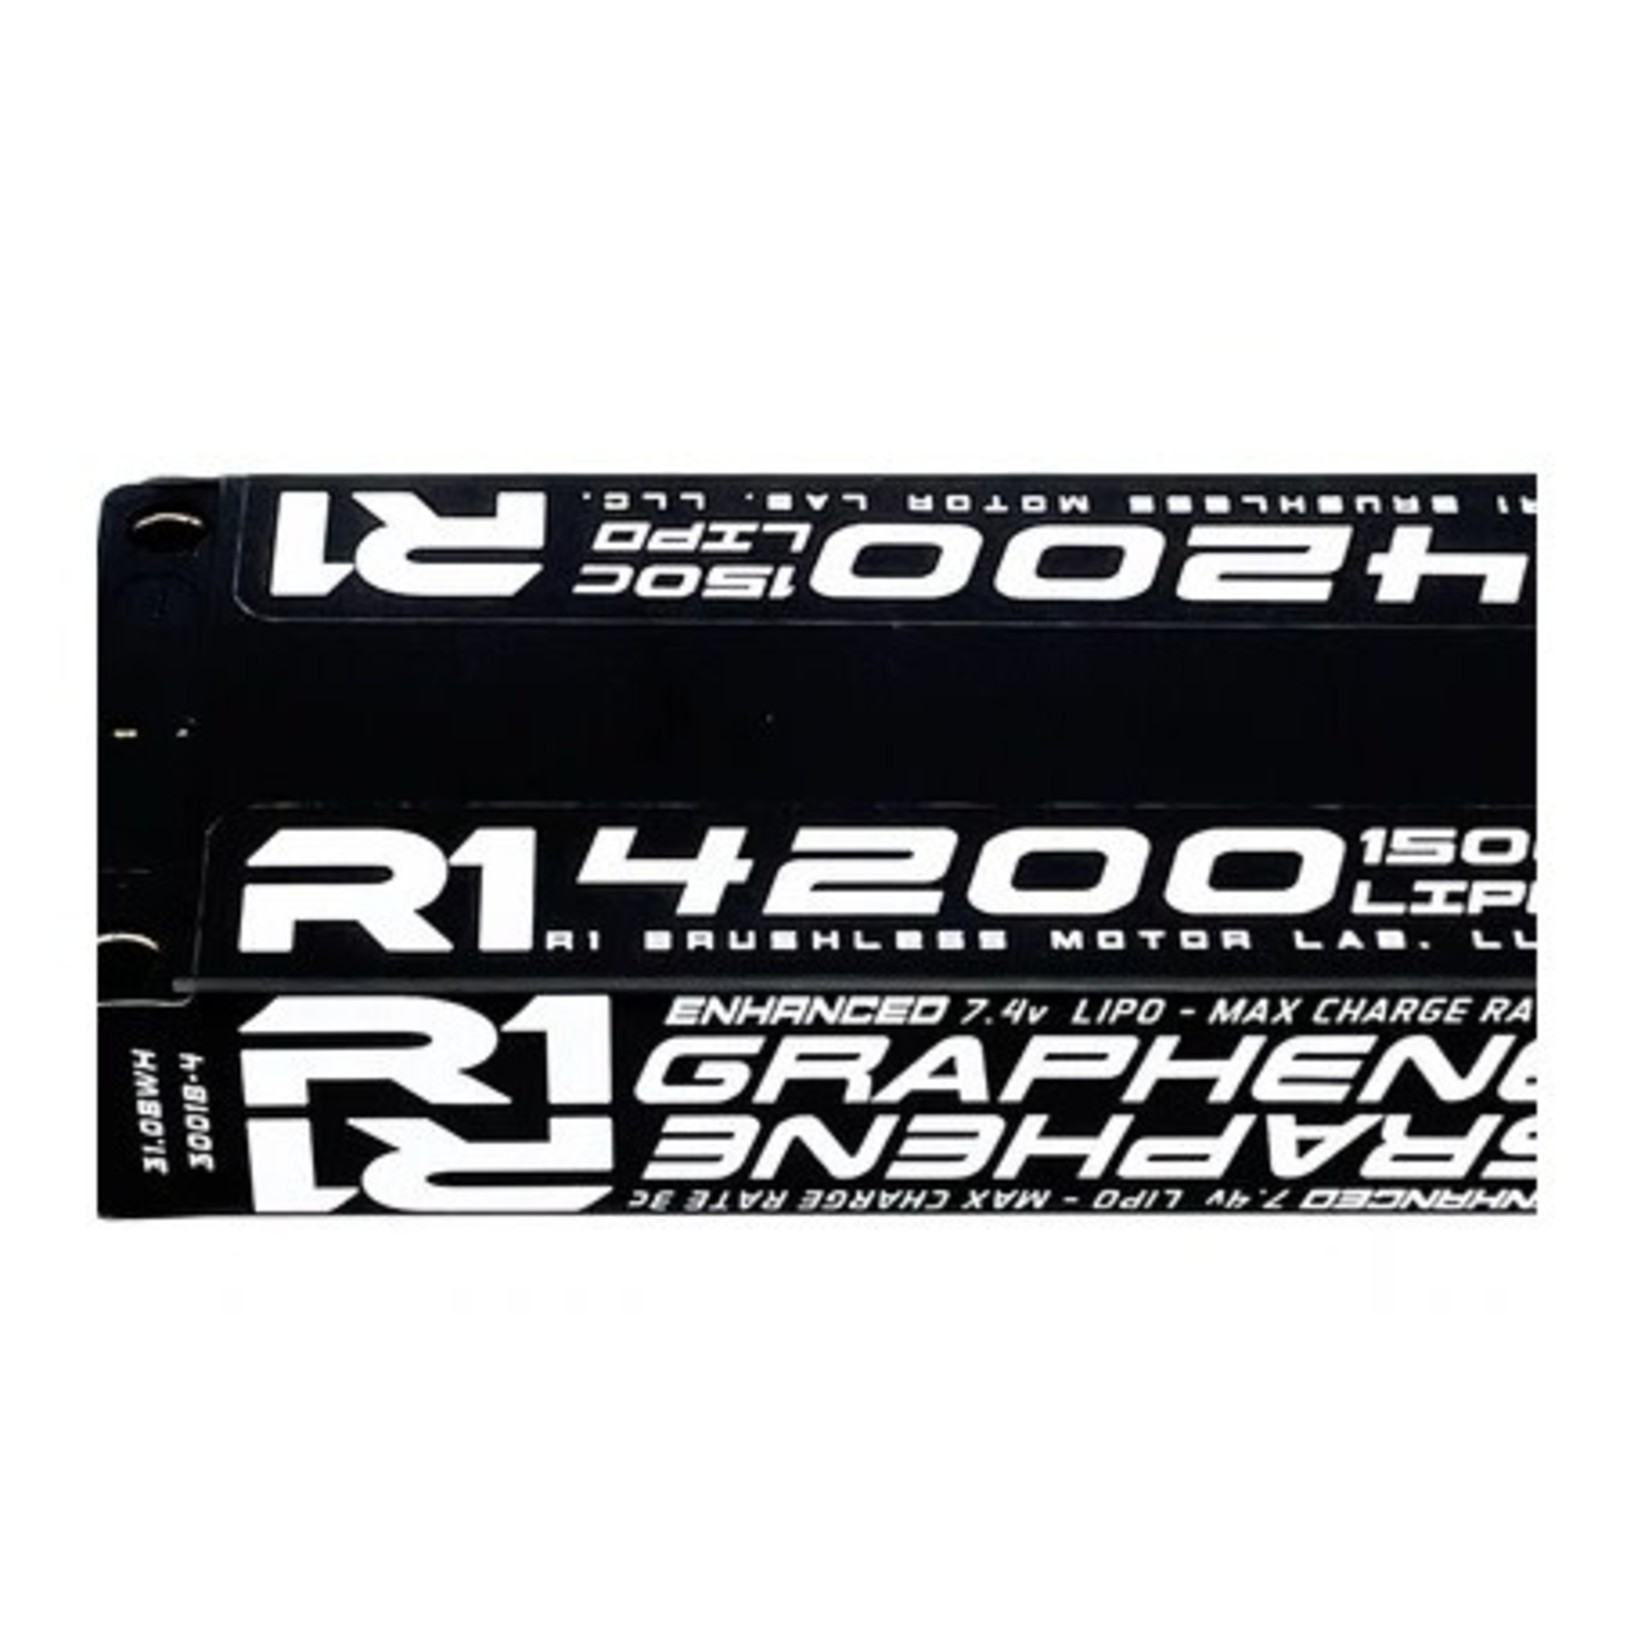 R1 Wurks R1 4200mah 150C 7.4V 2S LIPO Enhanced Graphene Low Profile Shorty Battery # 0300018-4